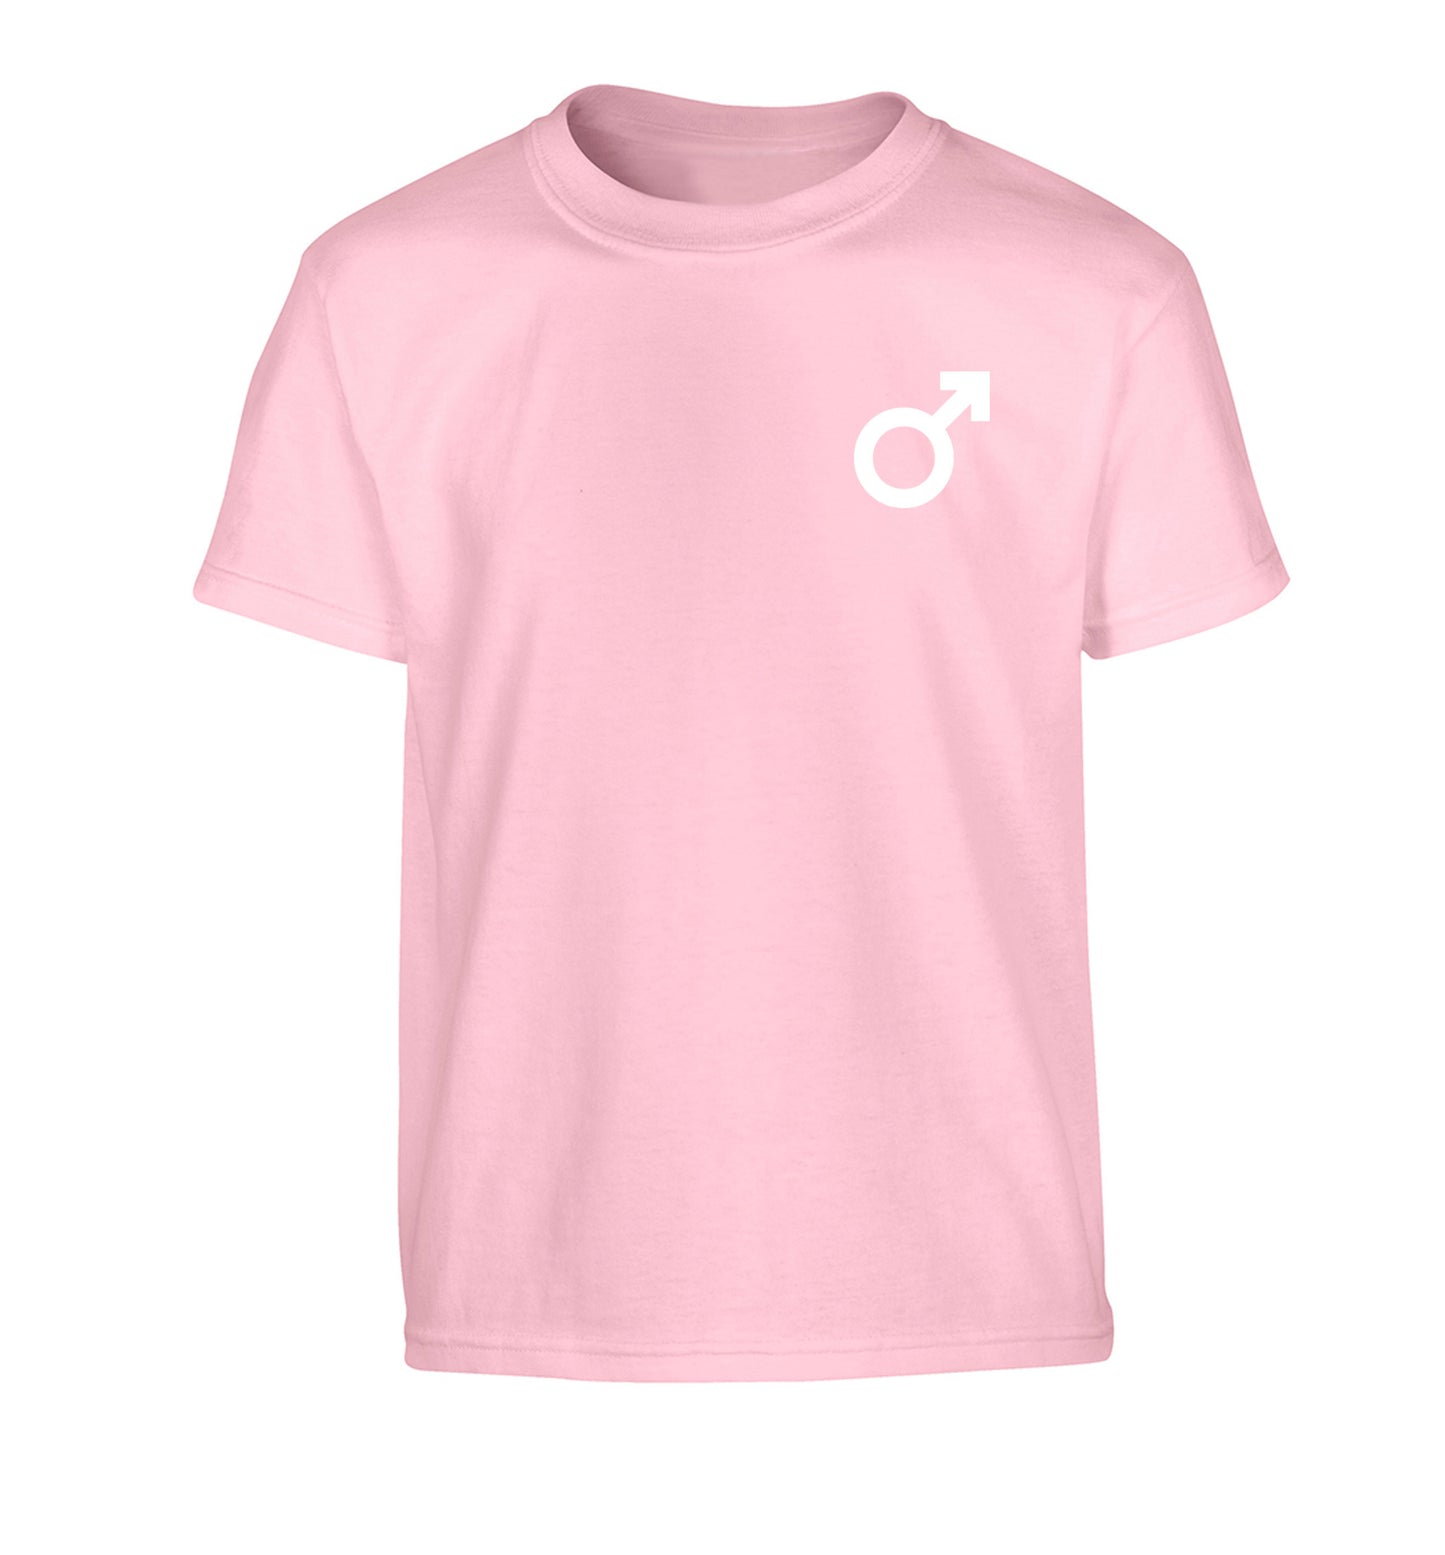 Male symbol pocket Children's light pink Tshirt 12-14 Years